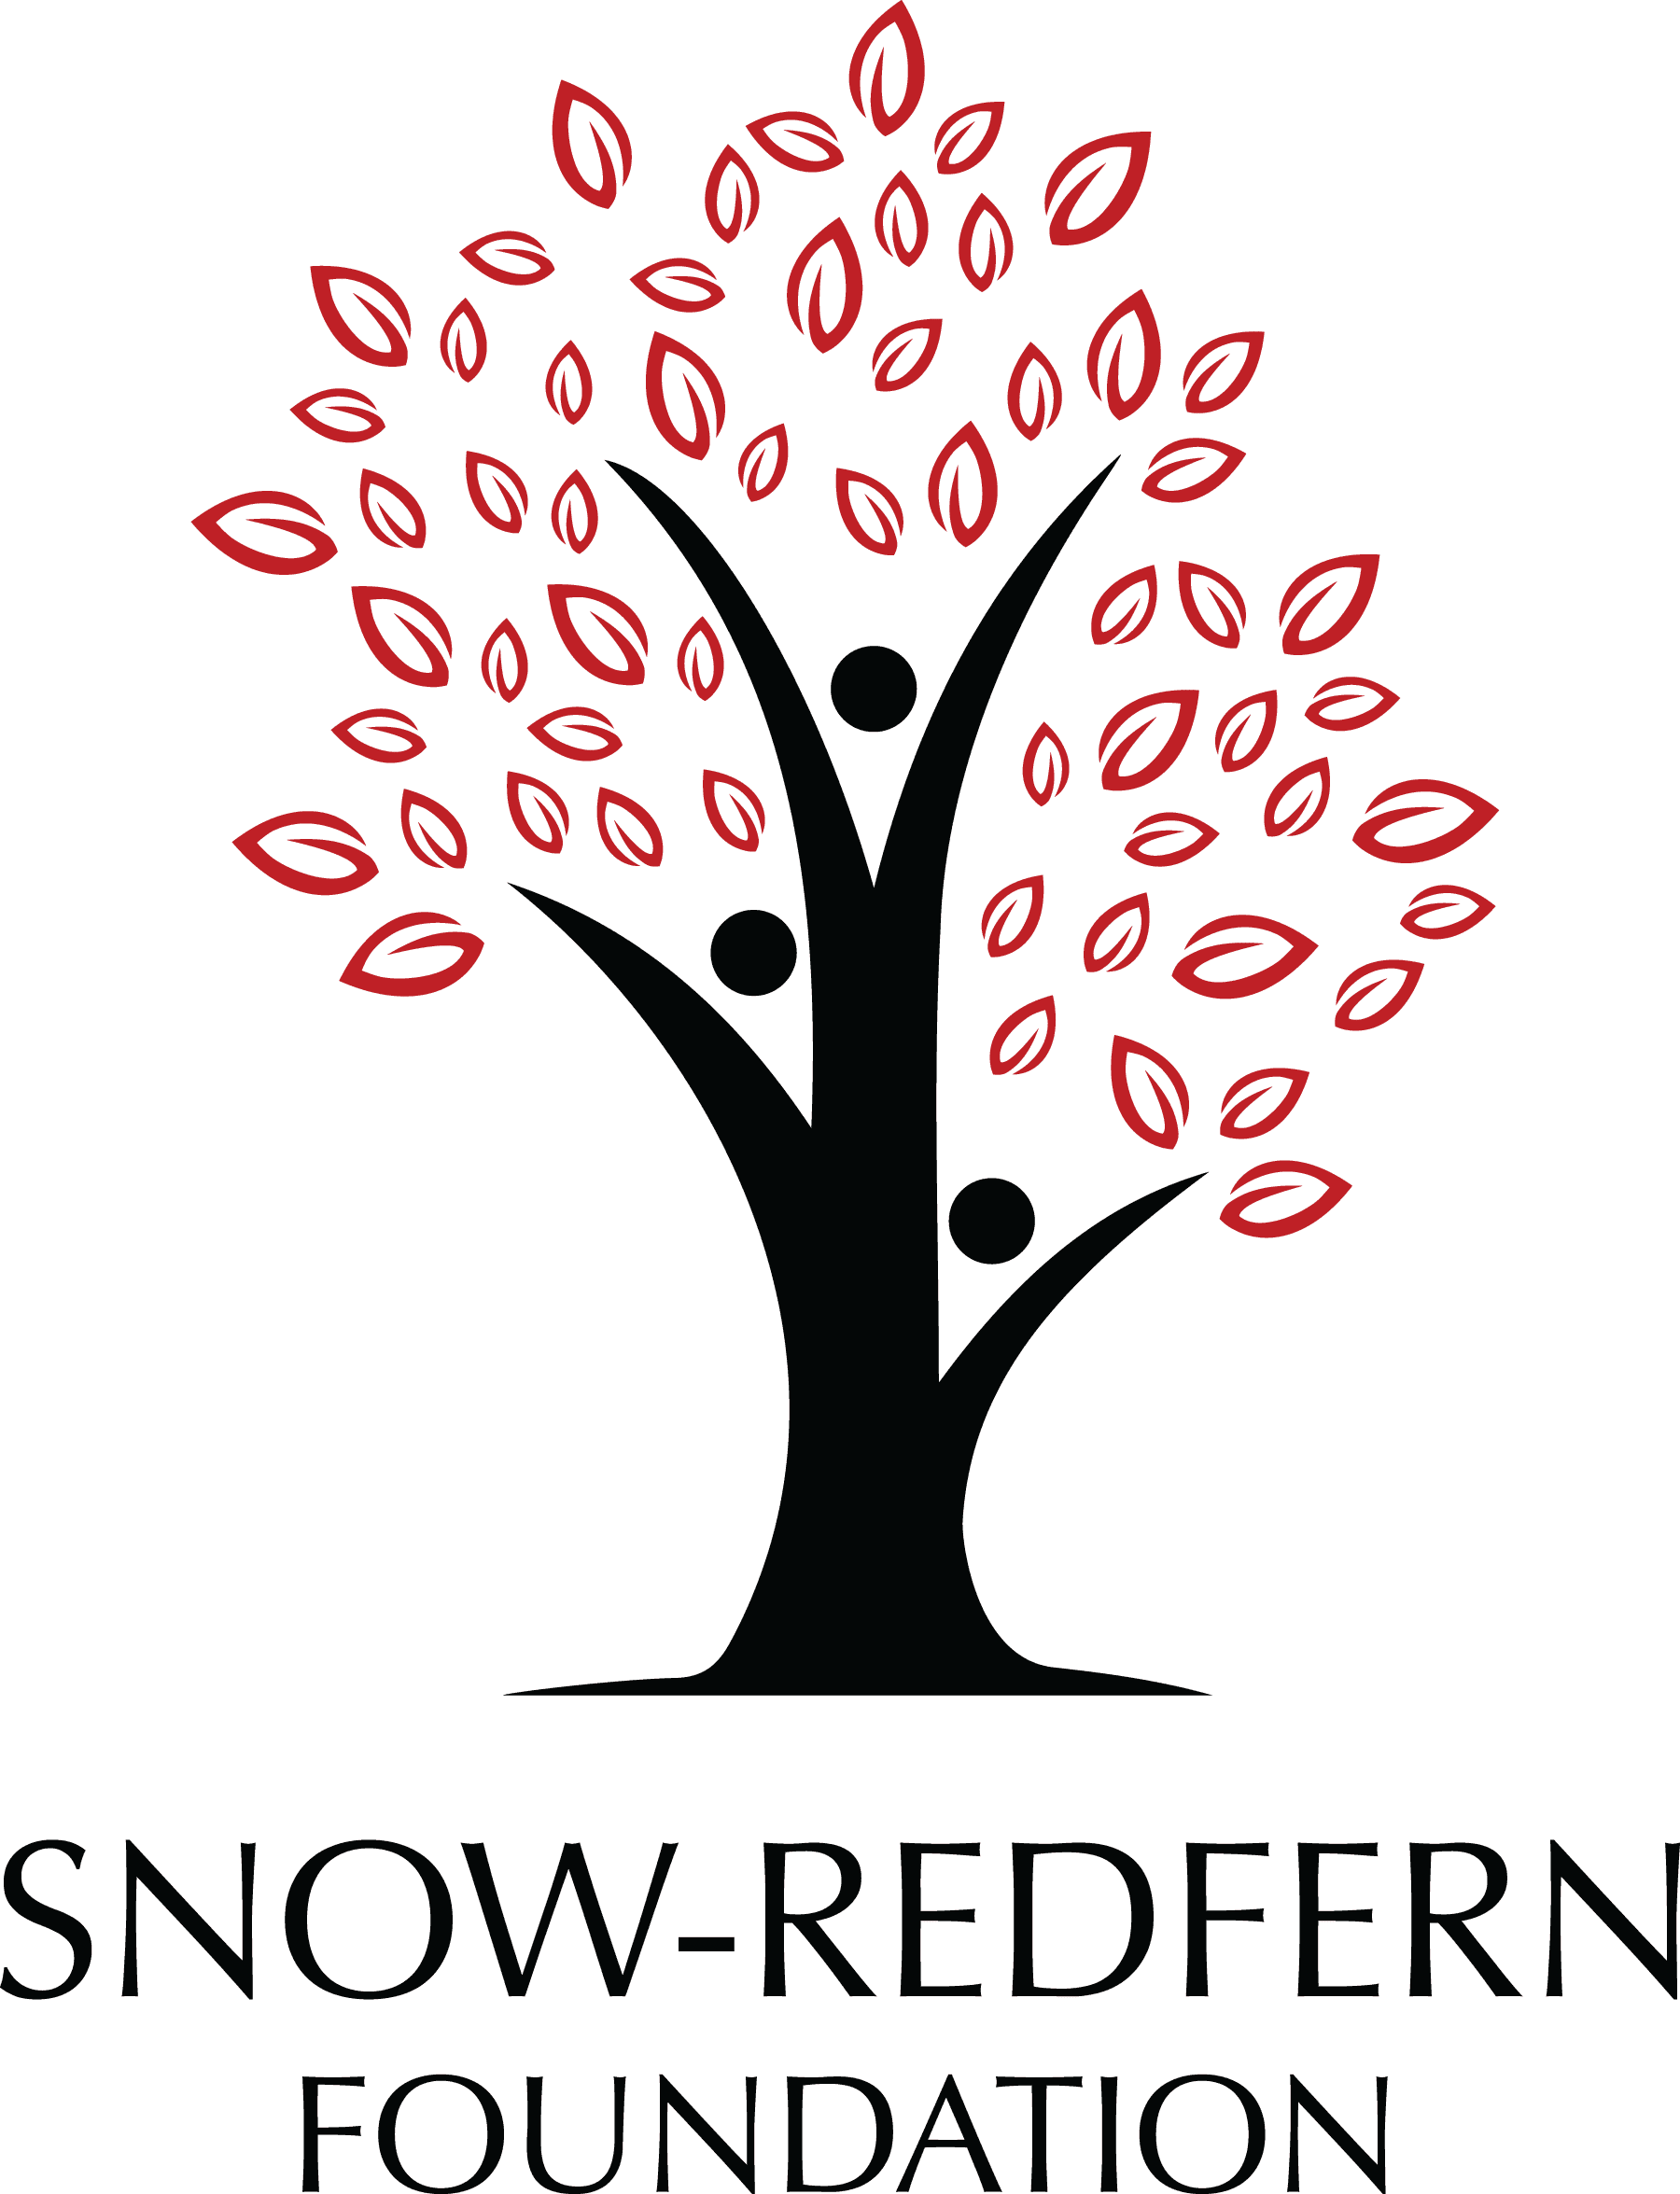 Snow-Redfern Foundation